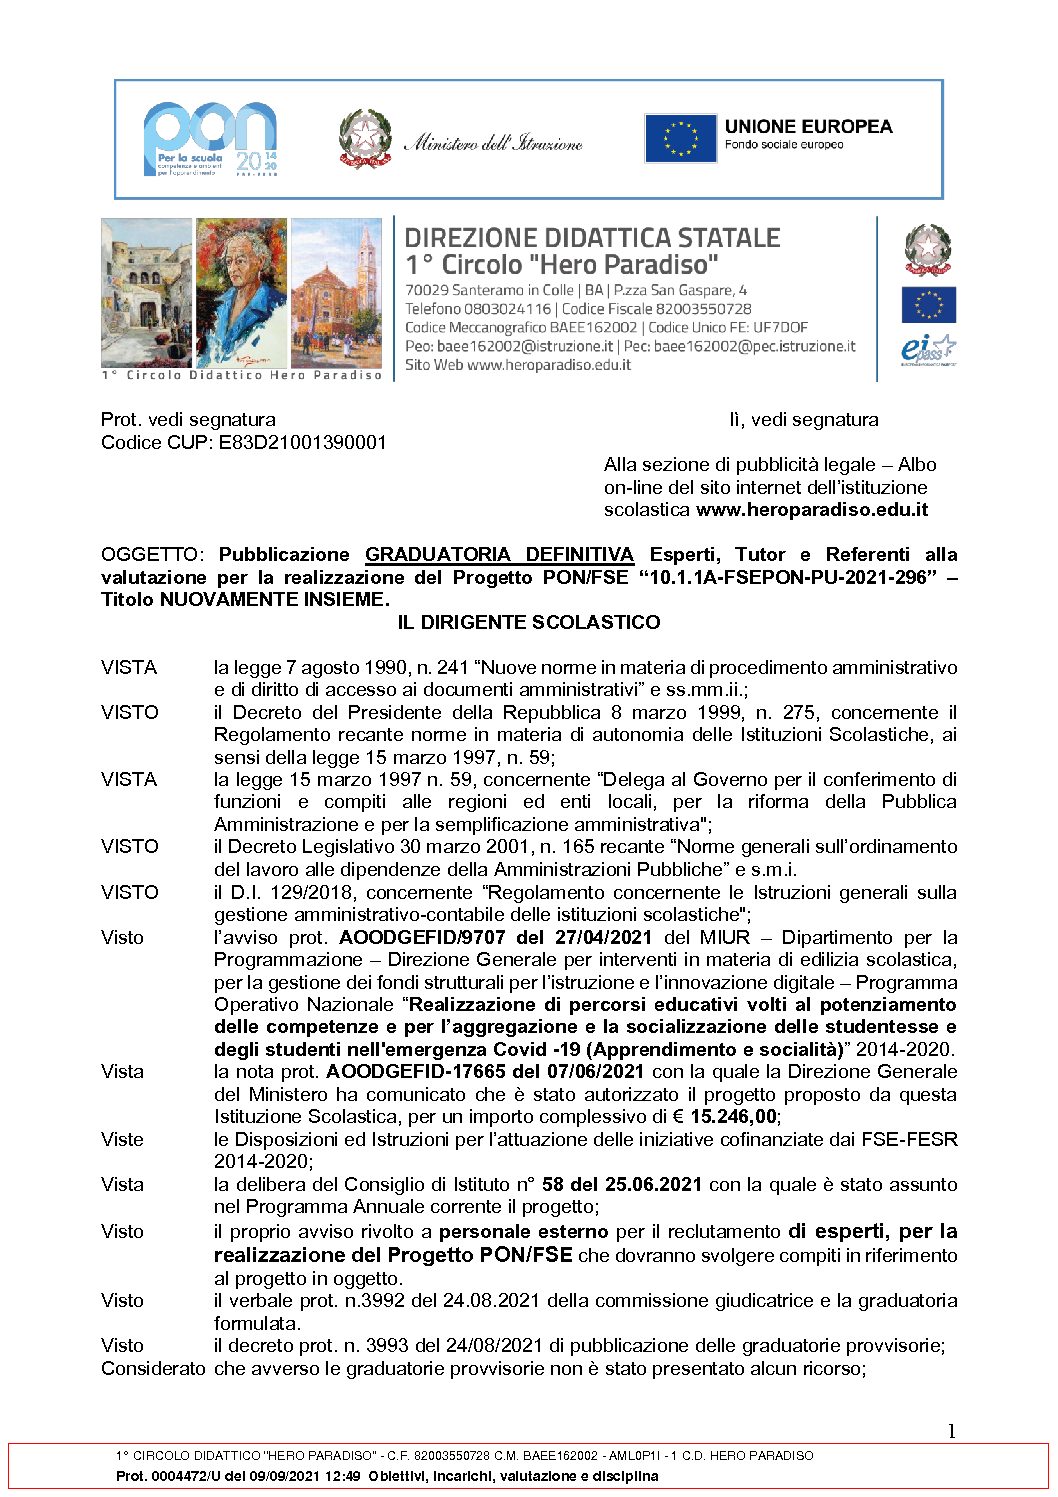 5._Graduatoria_DEFINITIVA_esperti_esterni_2021-296.pdf.pades